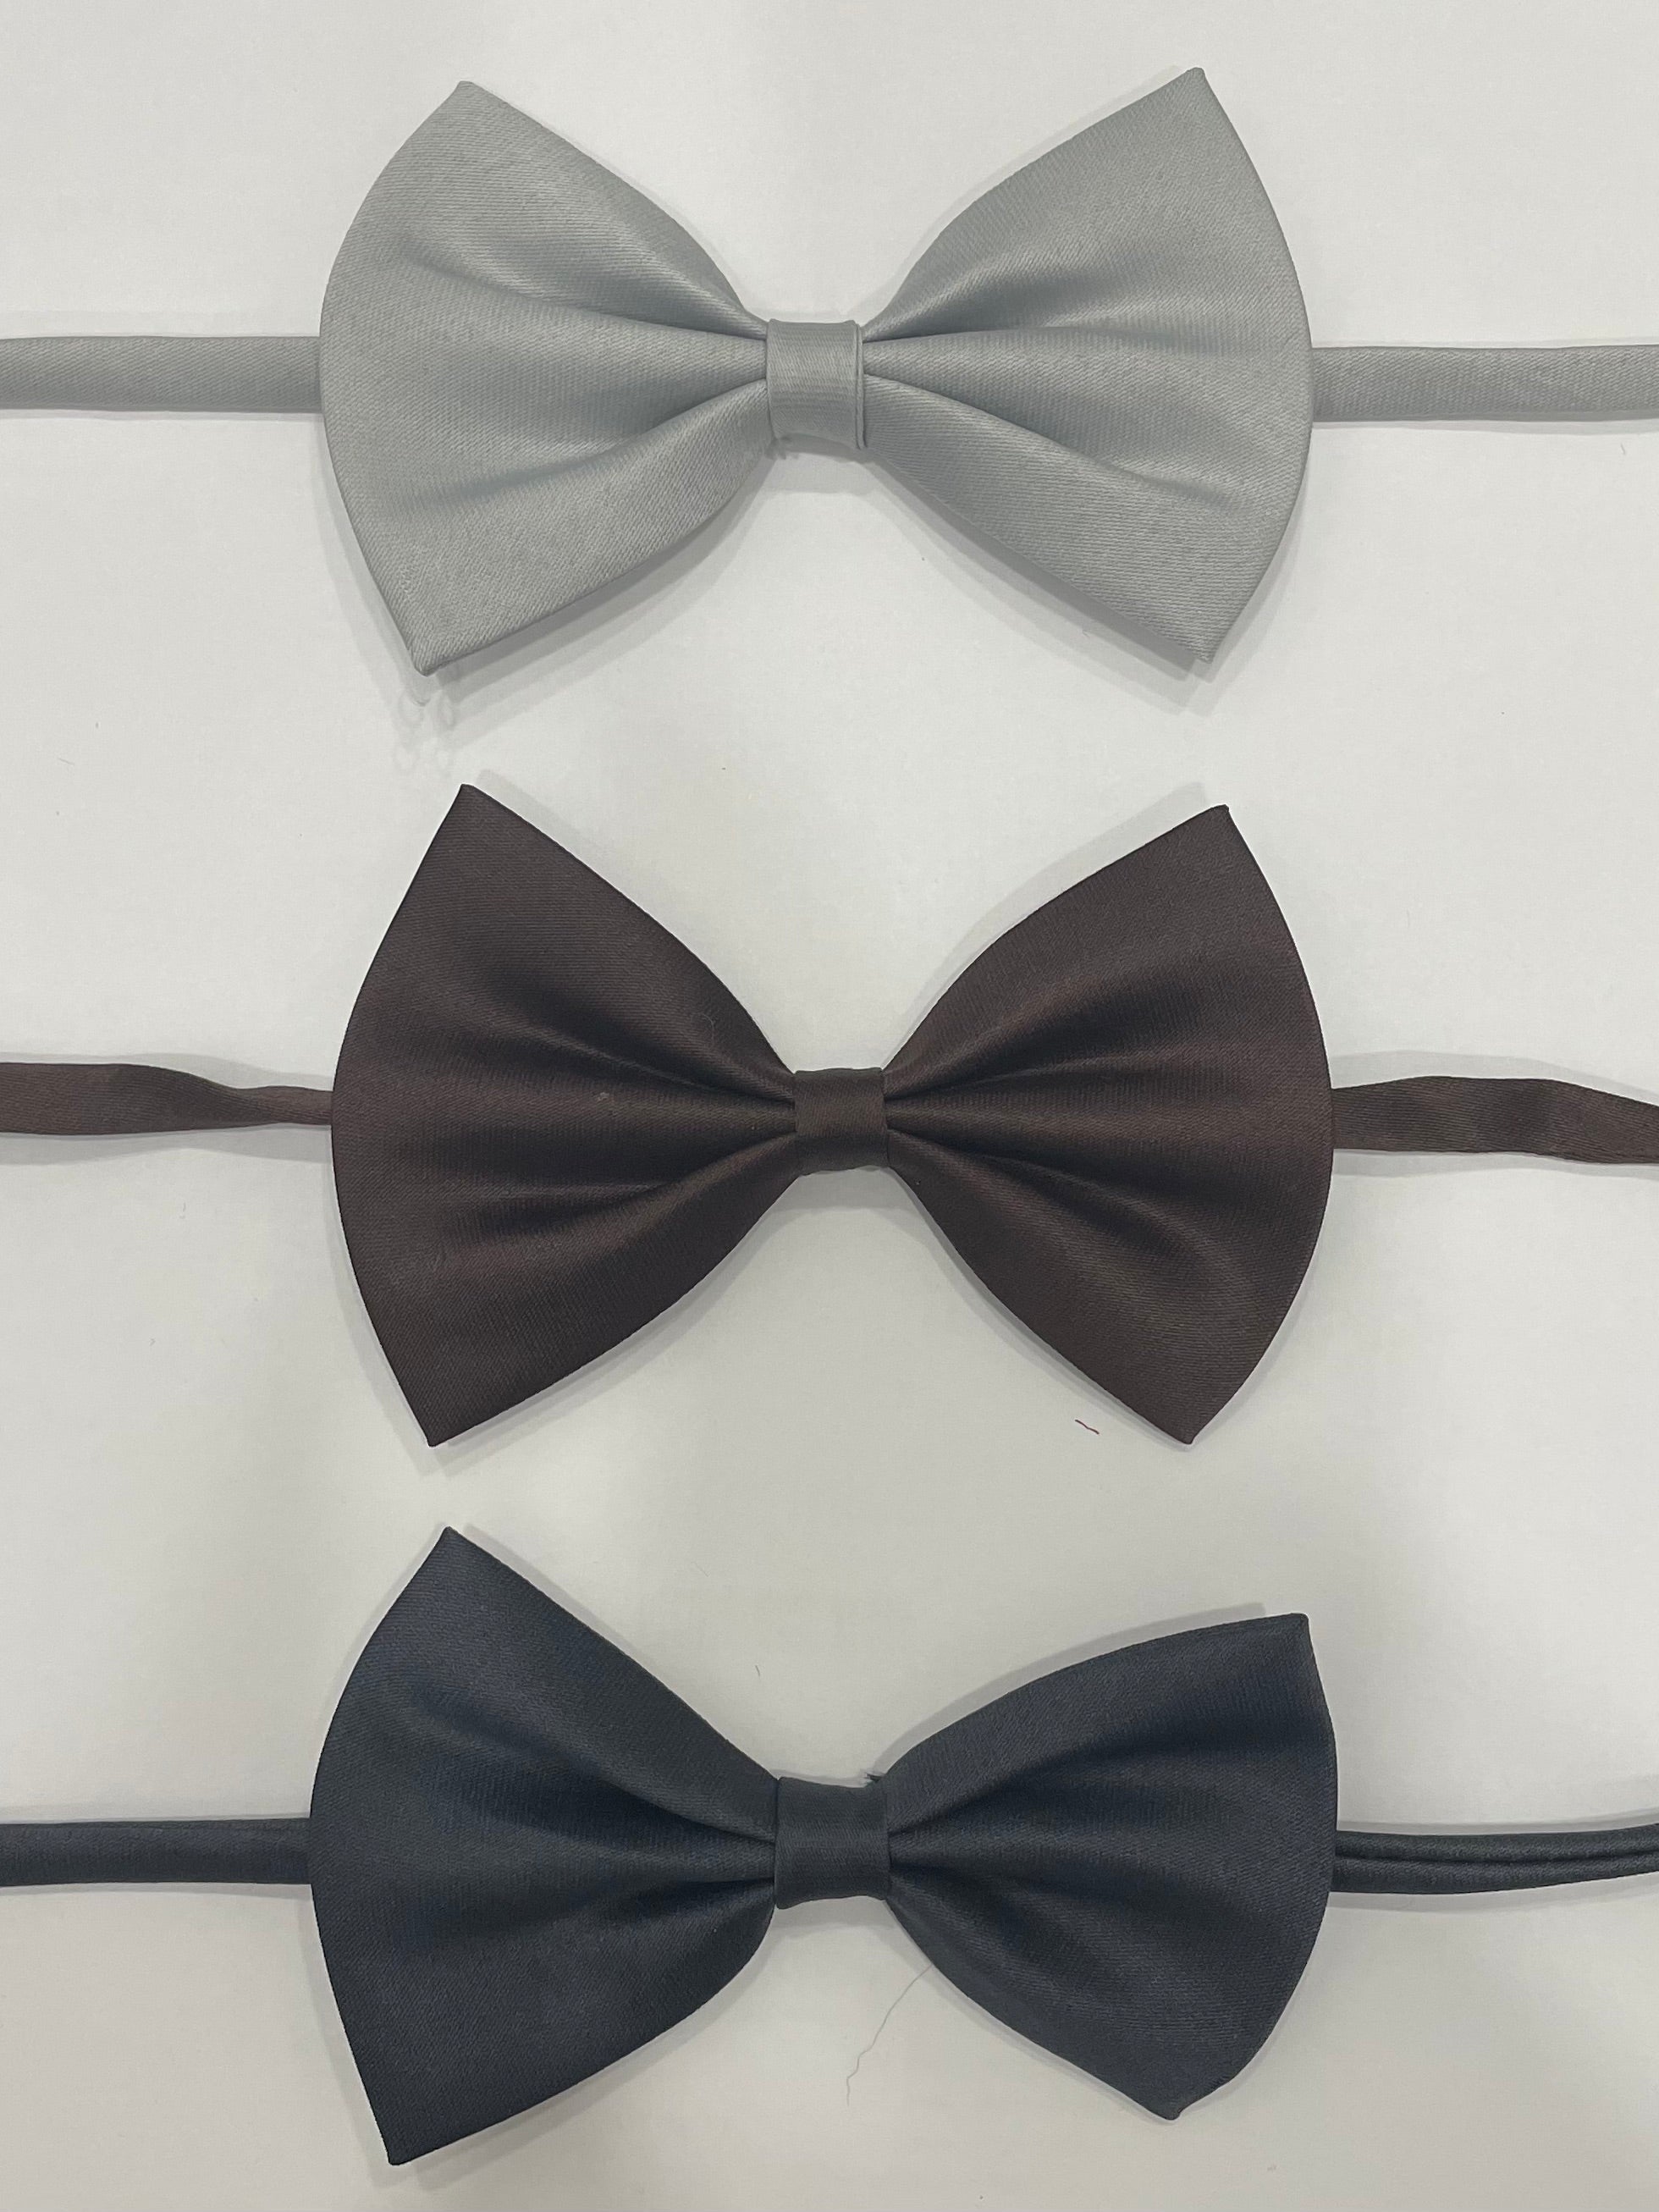 The silk bow tie